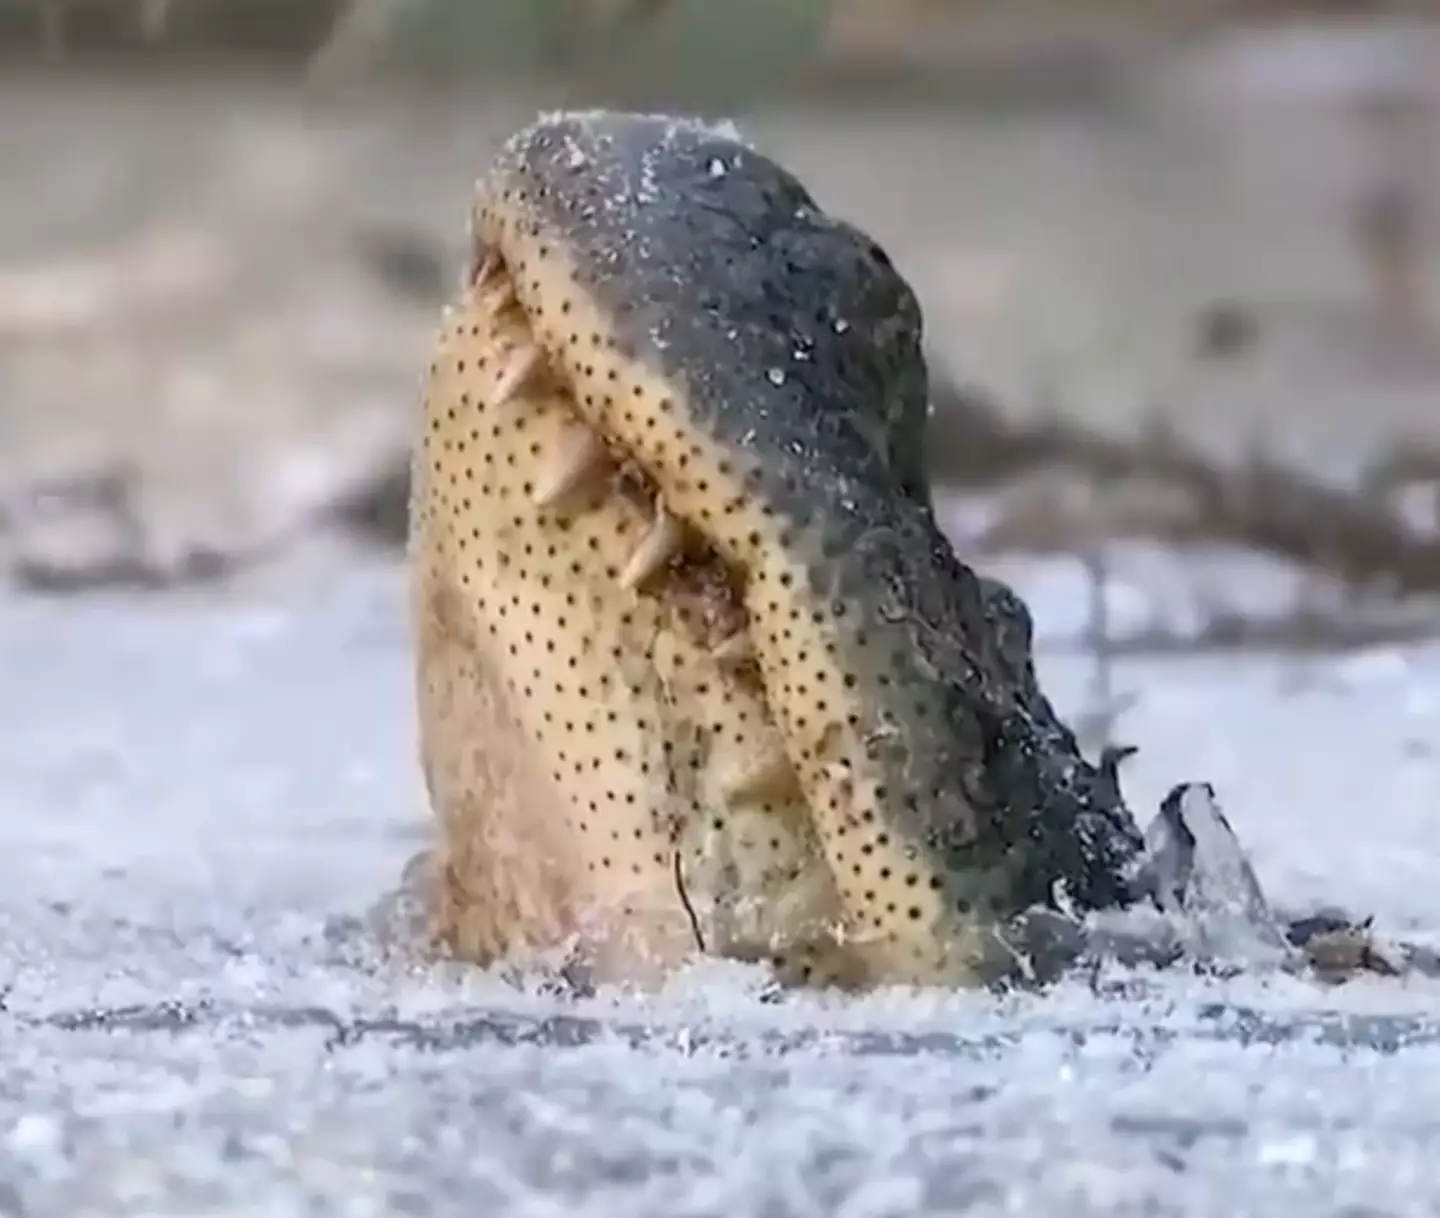 This is how alligators survive the freezing temperatures.